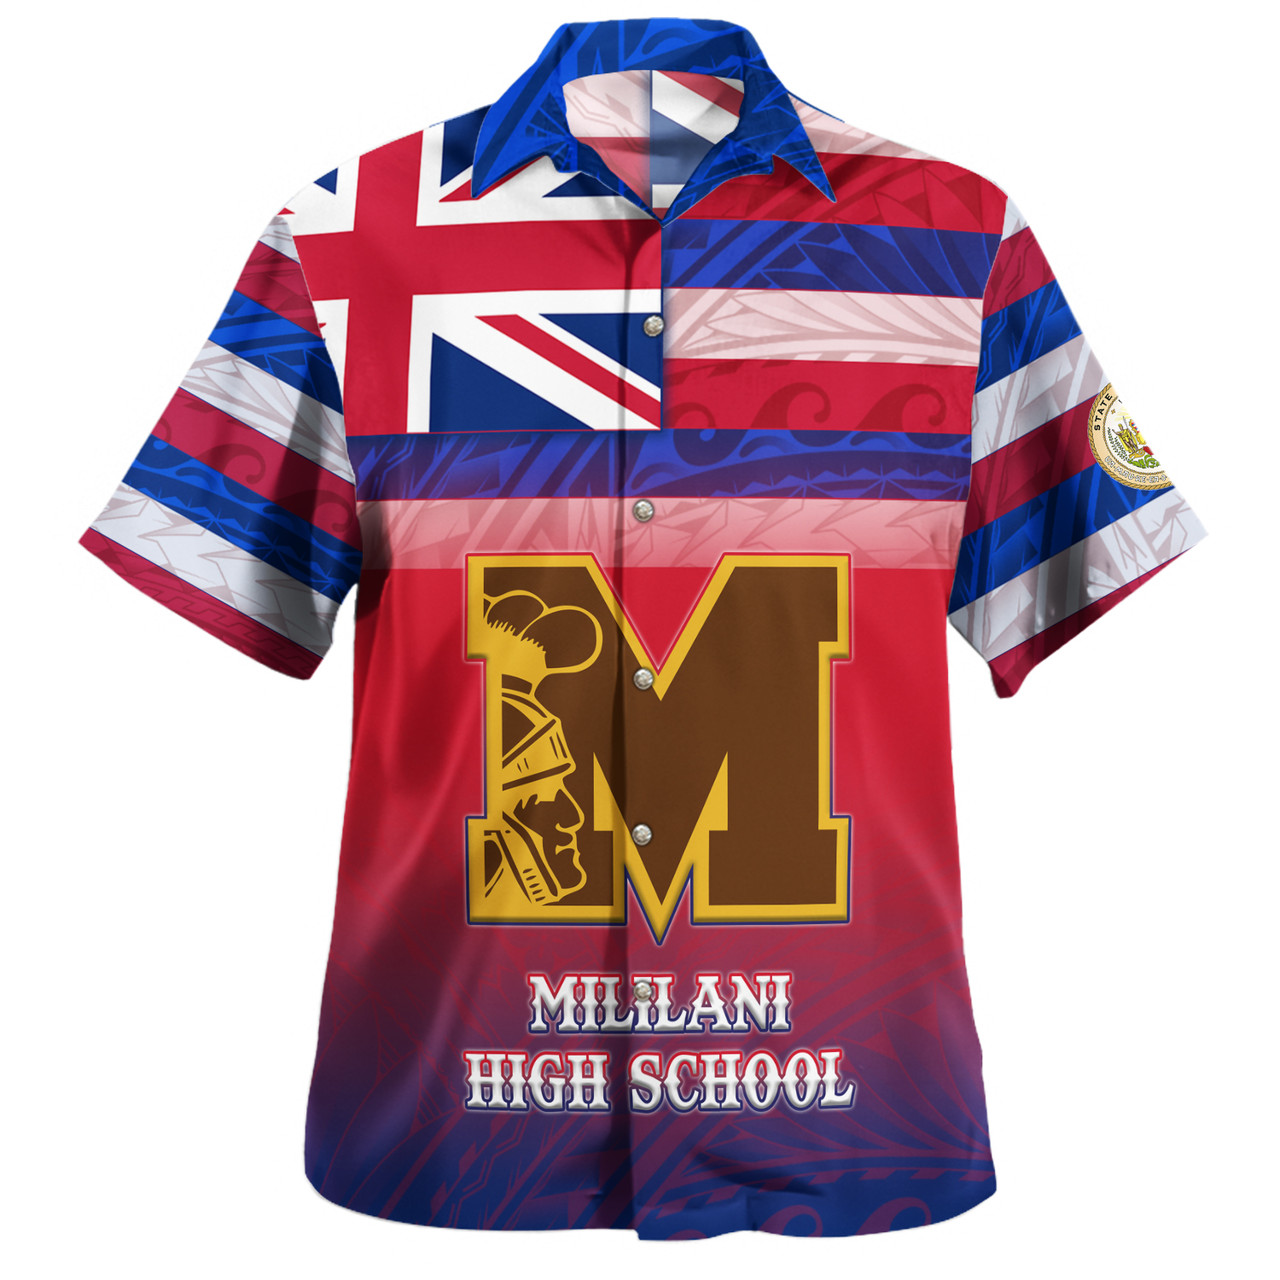 Hawaii Mililani High School Hawaii Shirt Flag Color With Traditional Patterns